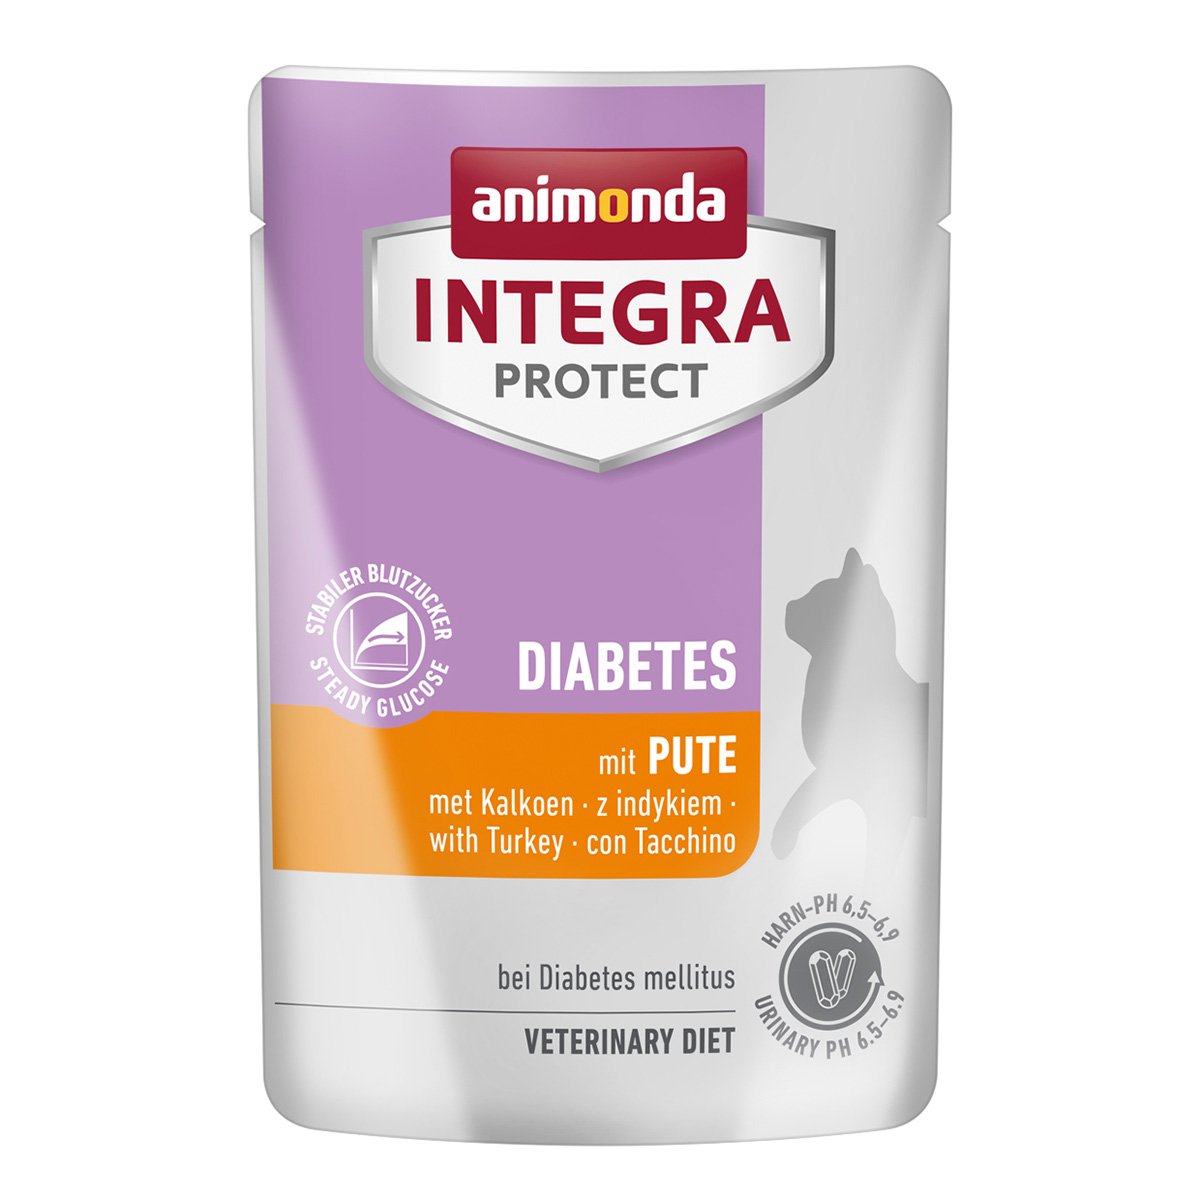 animonda INTEGRA PROTECT Diabetes Adult Pute 24x85g von animonda Integra Protect